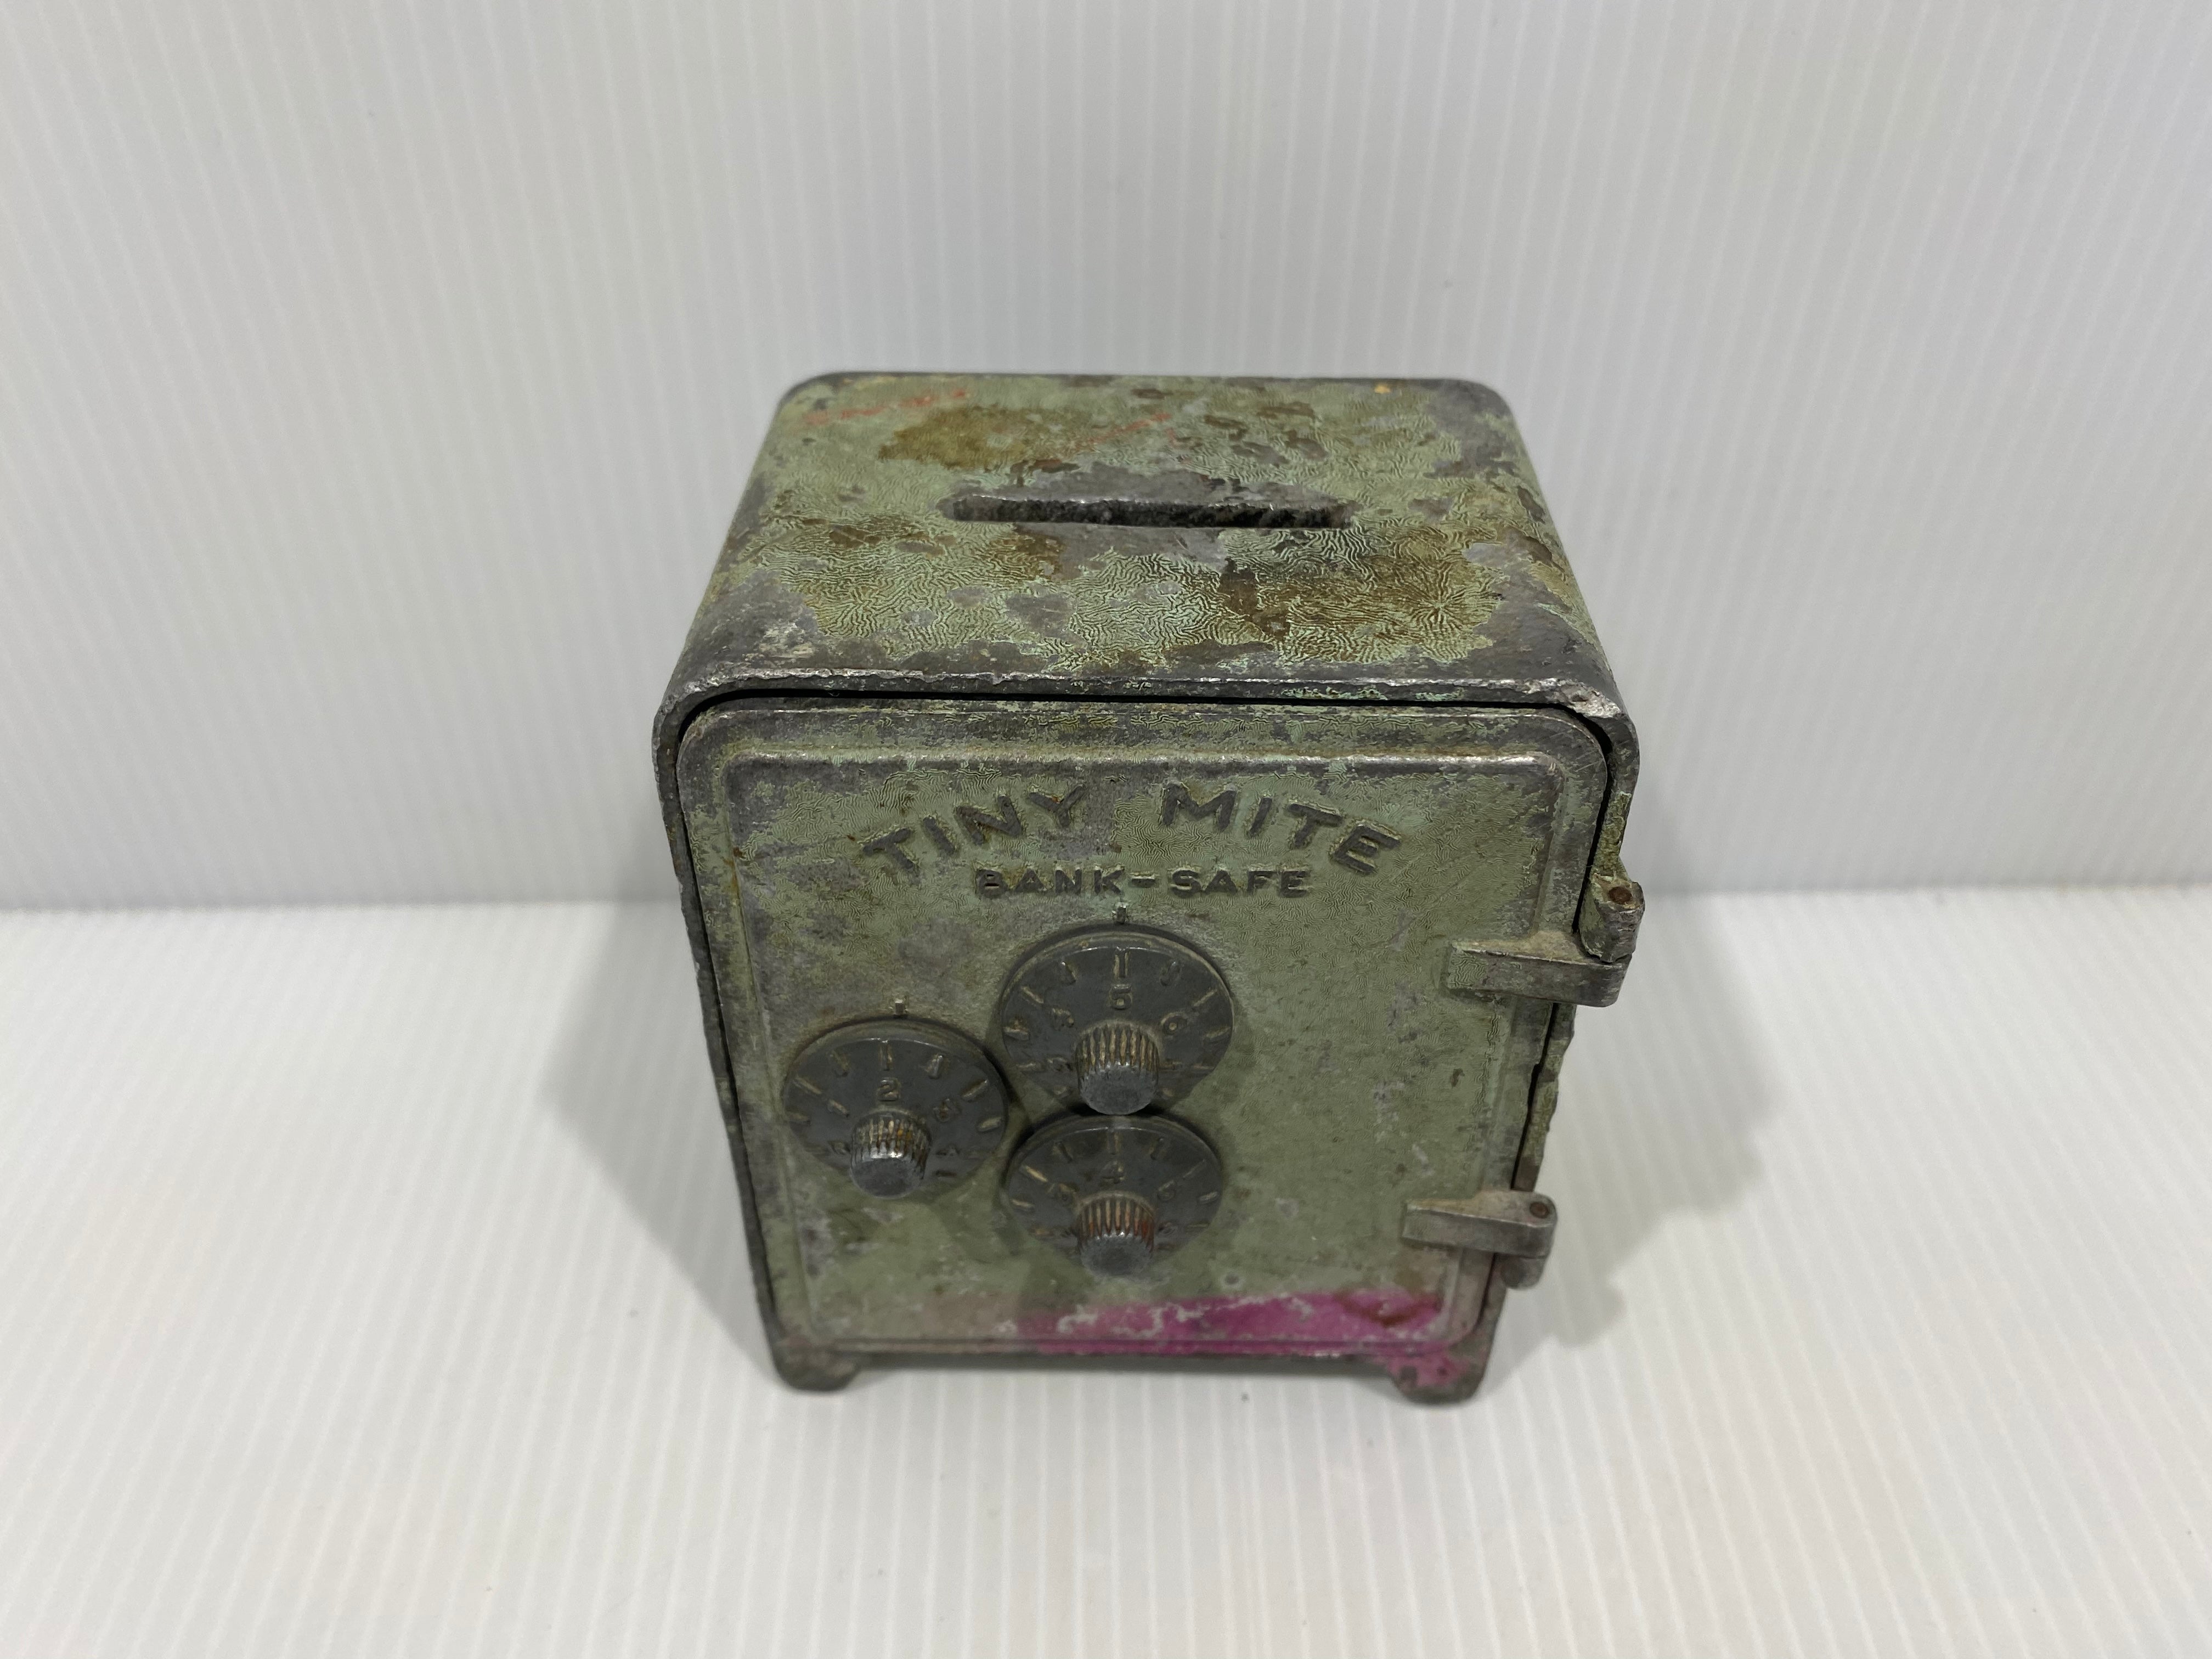 Tiny Mite Bank Safe Cast Iron Bank